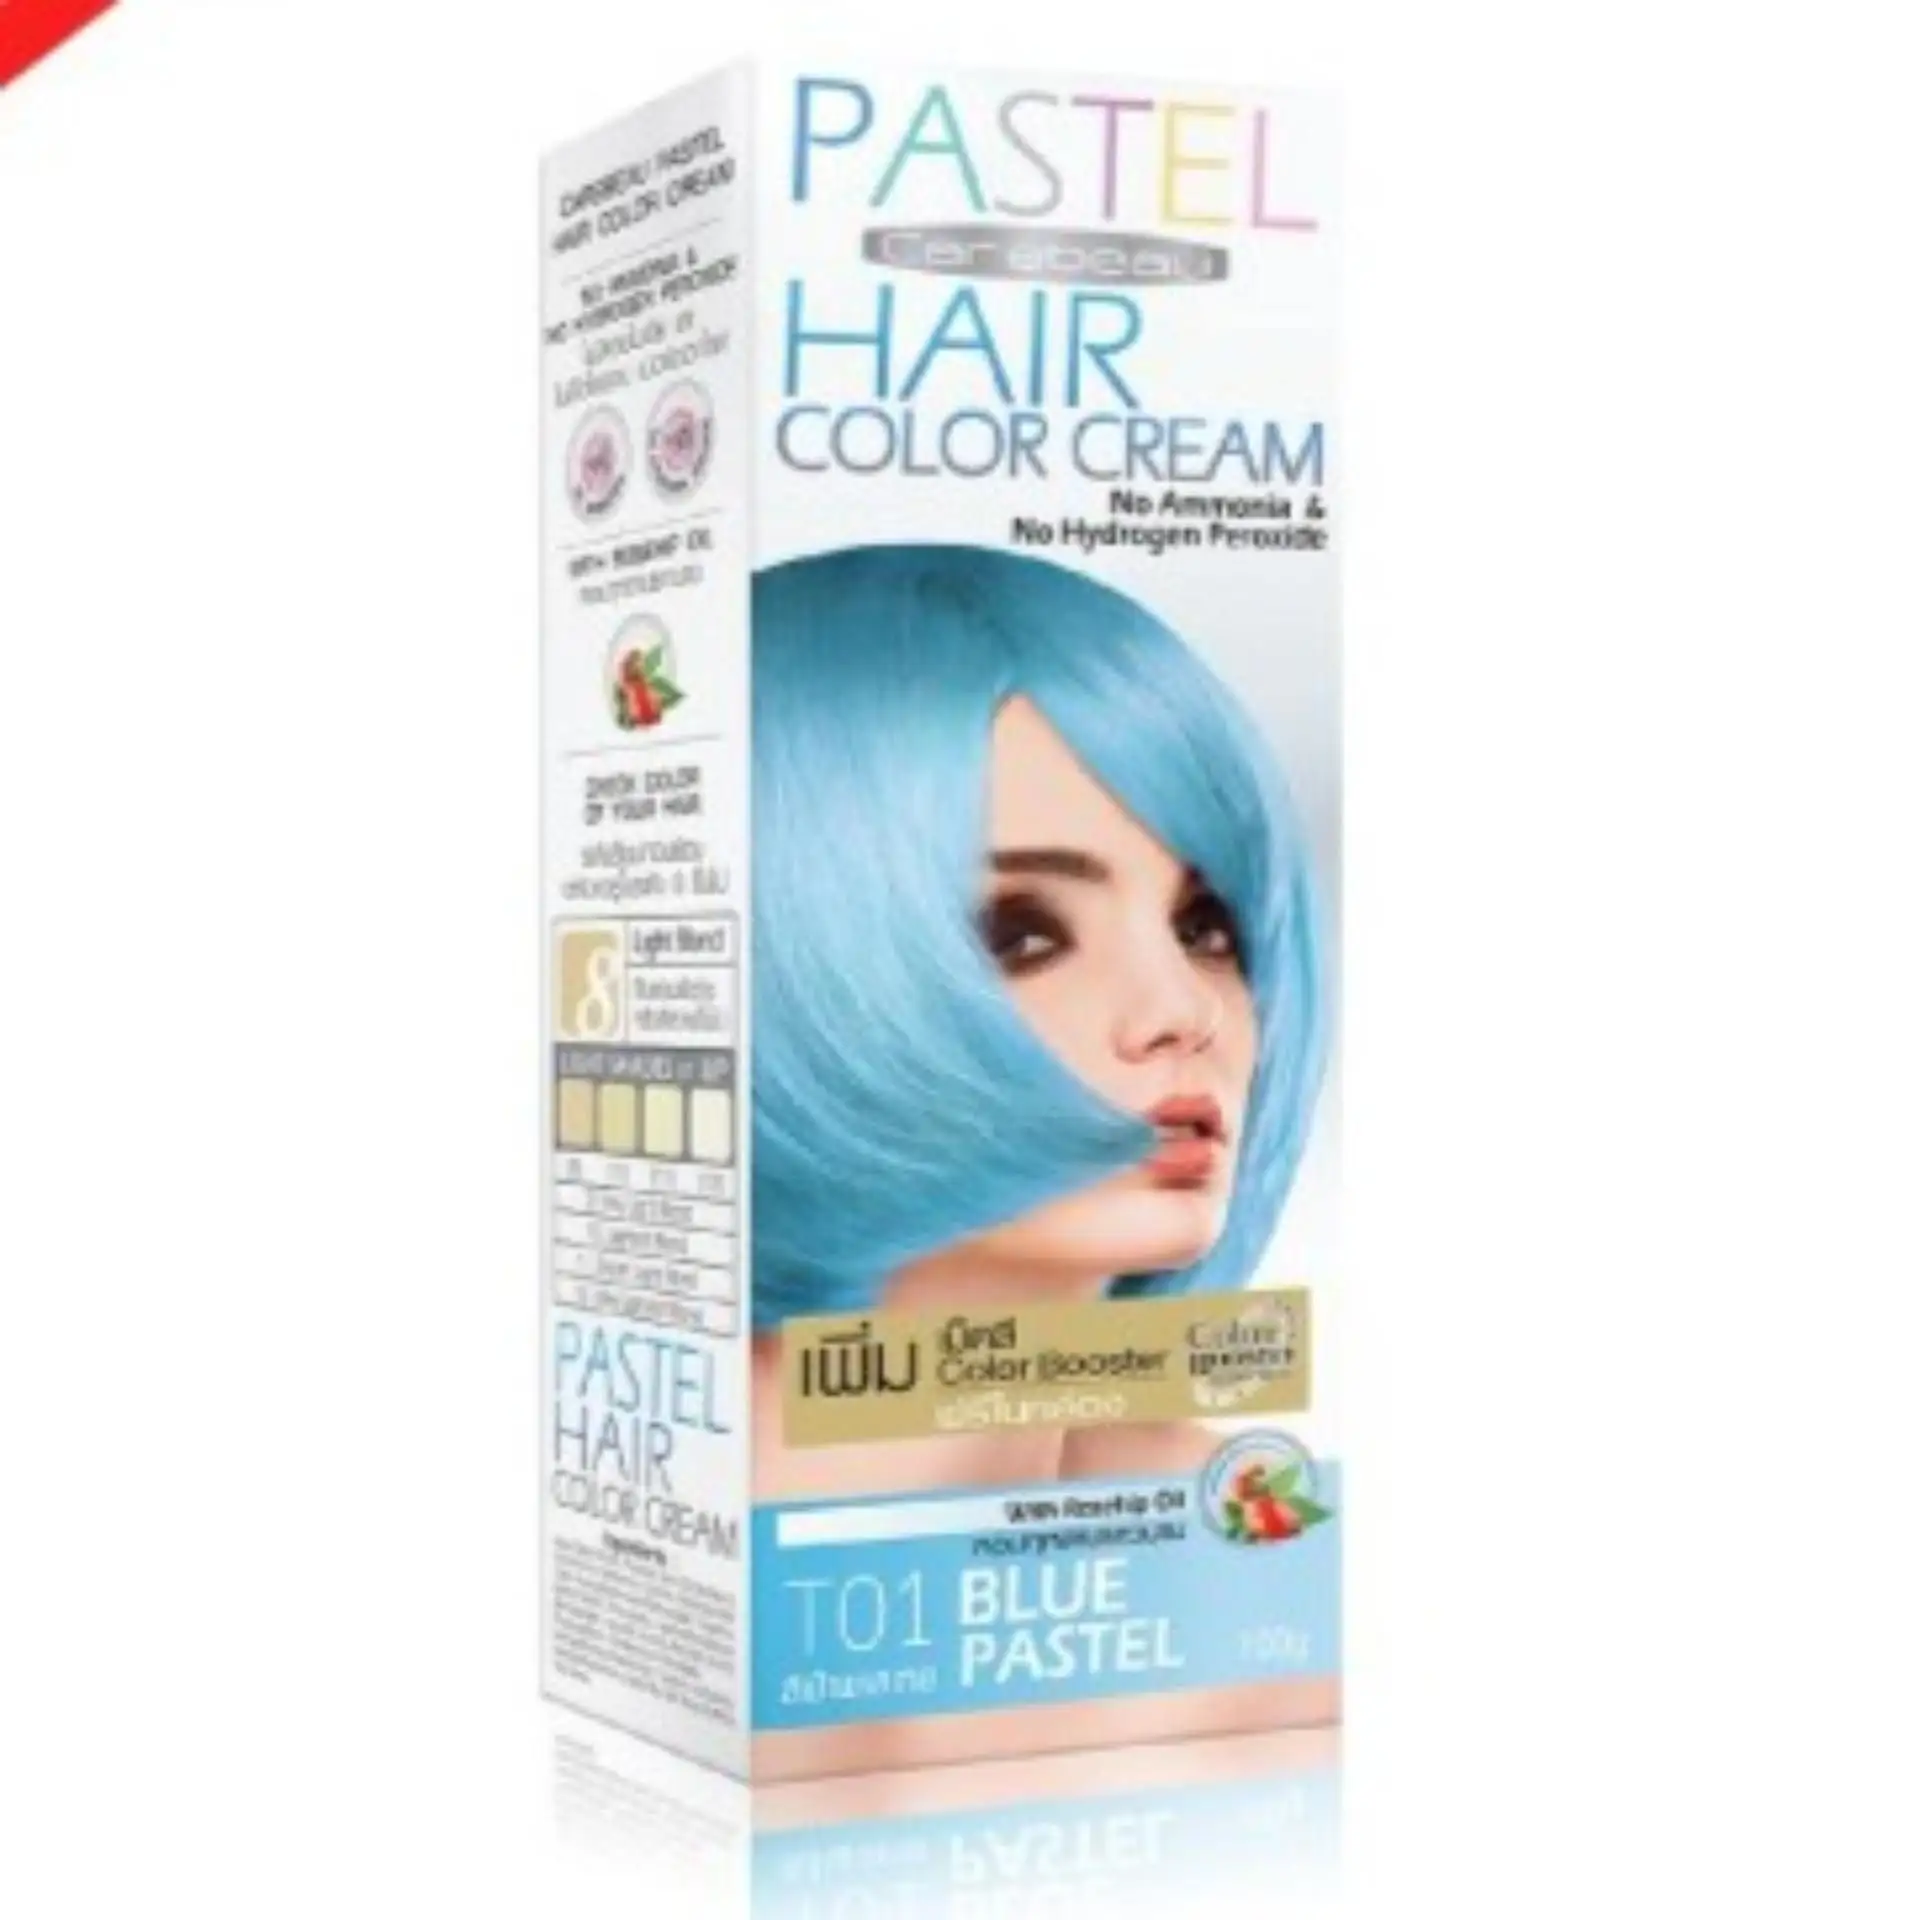 Best Seller Hair Color Cream Hair Dye Cream Pastel Hair Color Cream Hair Style 100g from Thailand Manufacturer